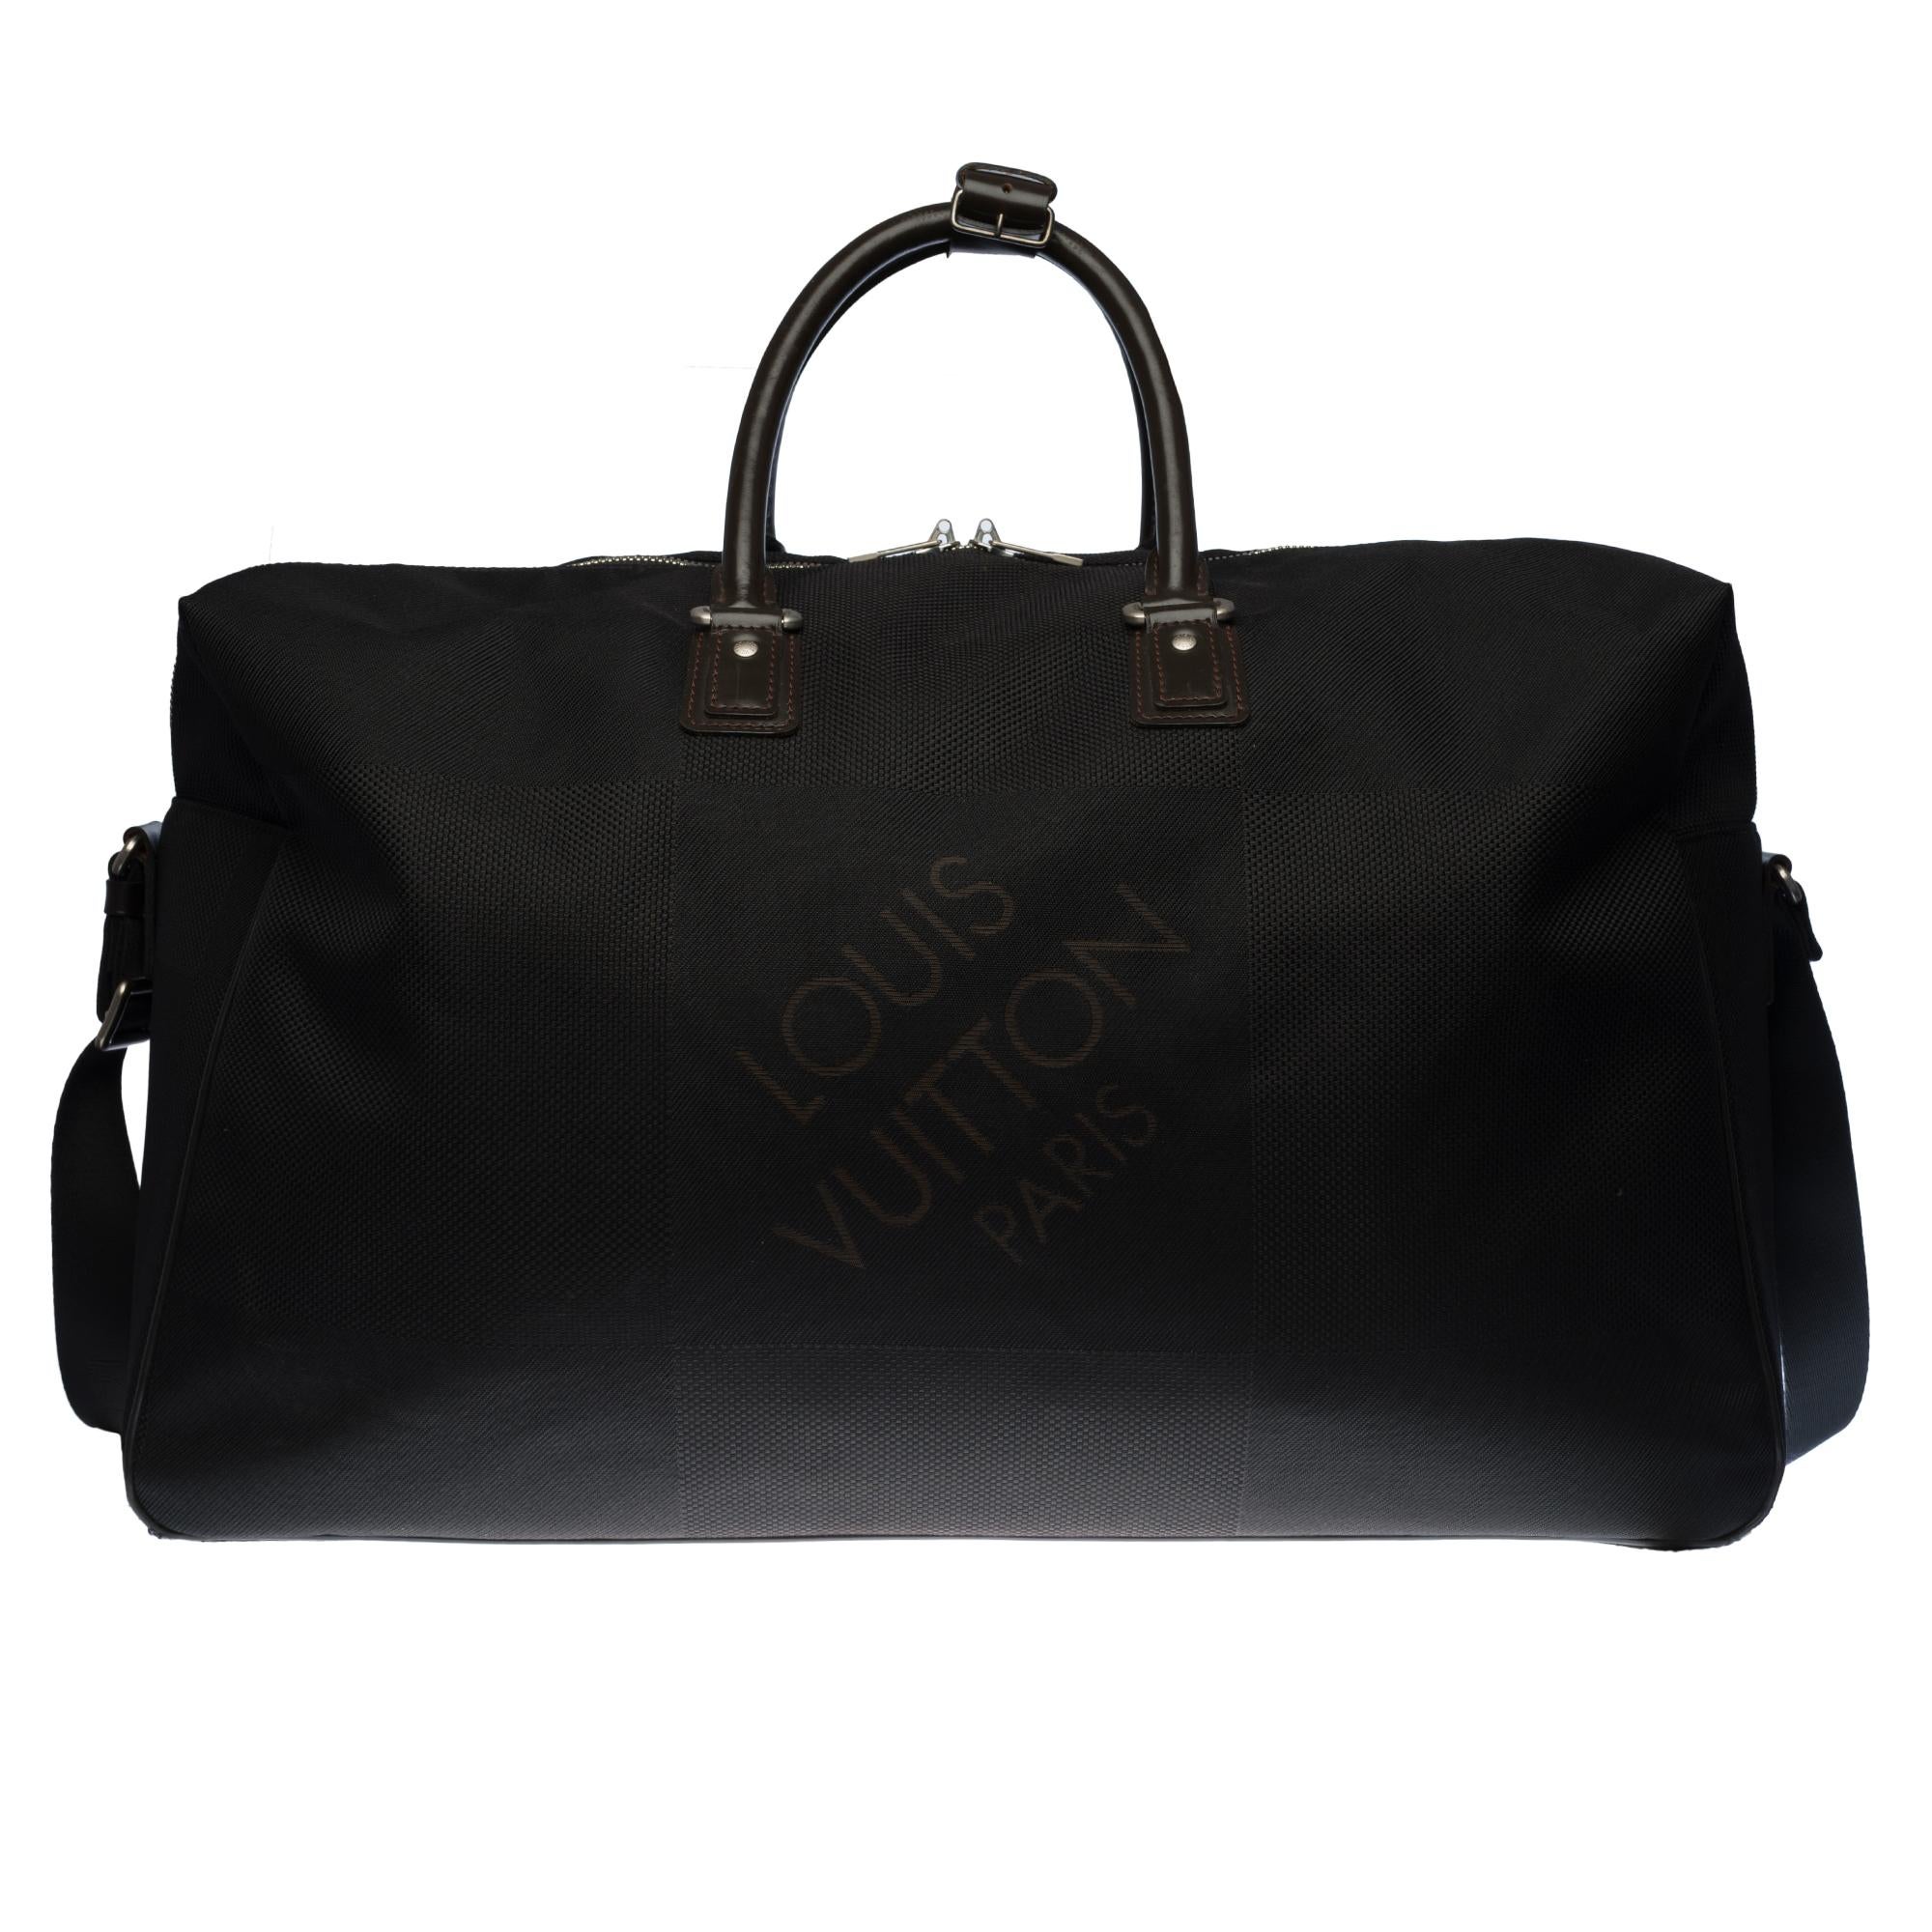 Black Louis Vuitton Boston 55  Travel bag strap in black canvas and silver hardware